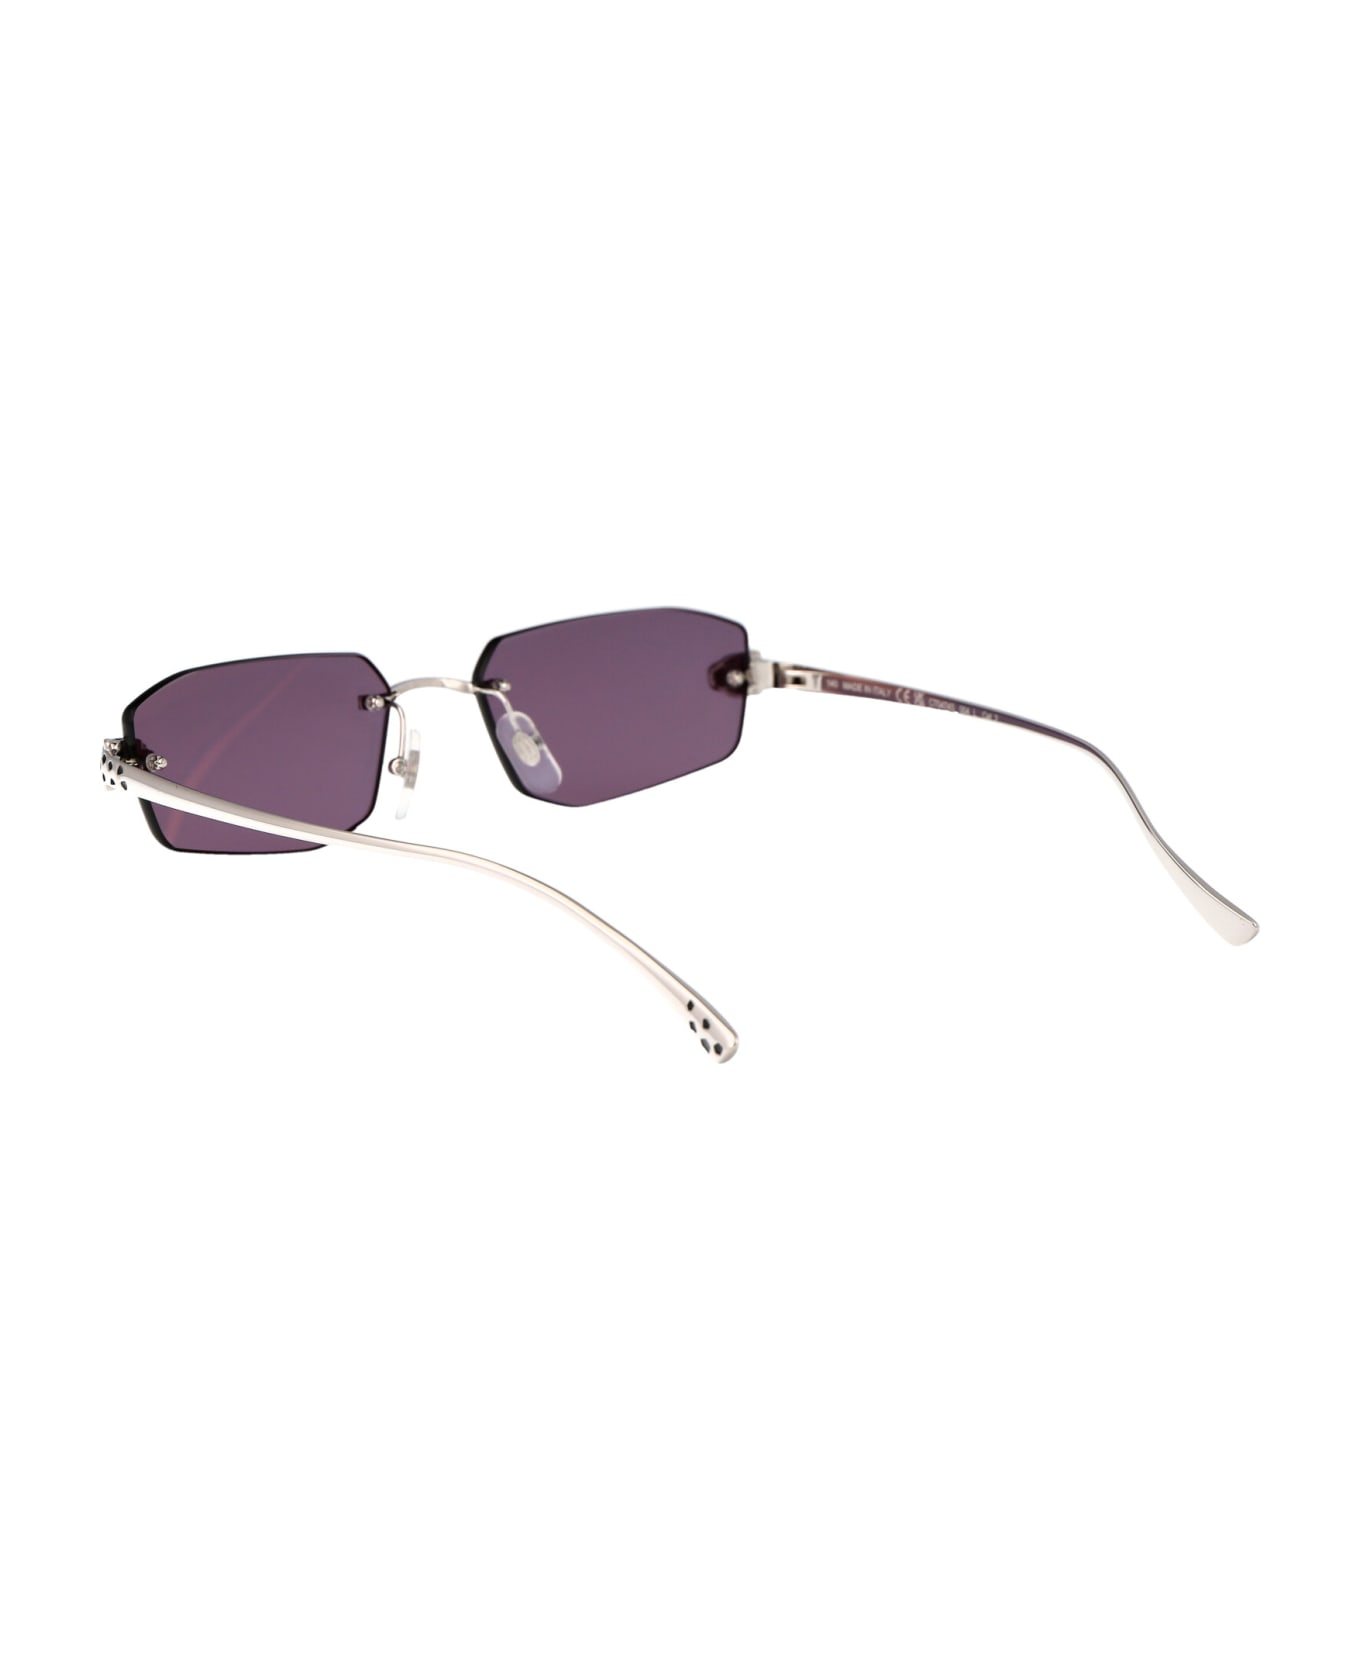 Cartier Eyewear Ct0474s Sunglasses - 004 SILVER SILVER VIOLET サングラス